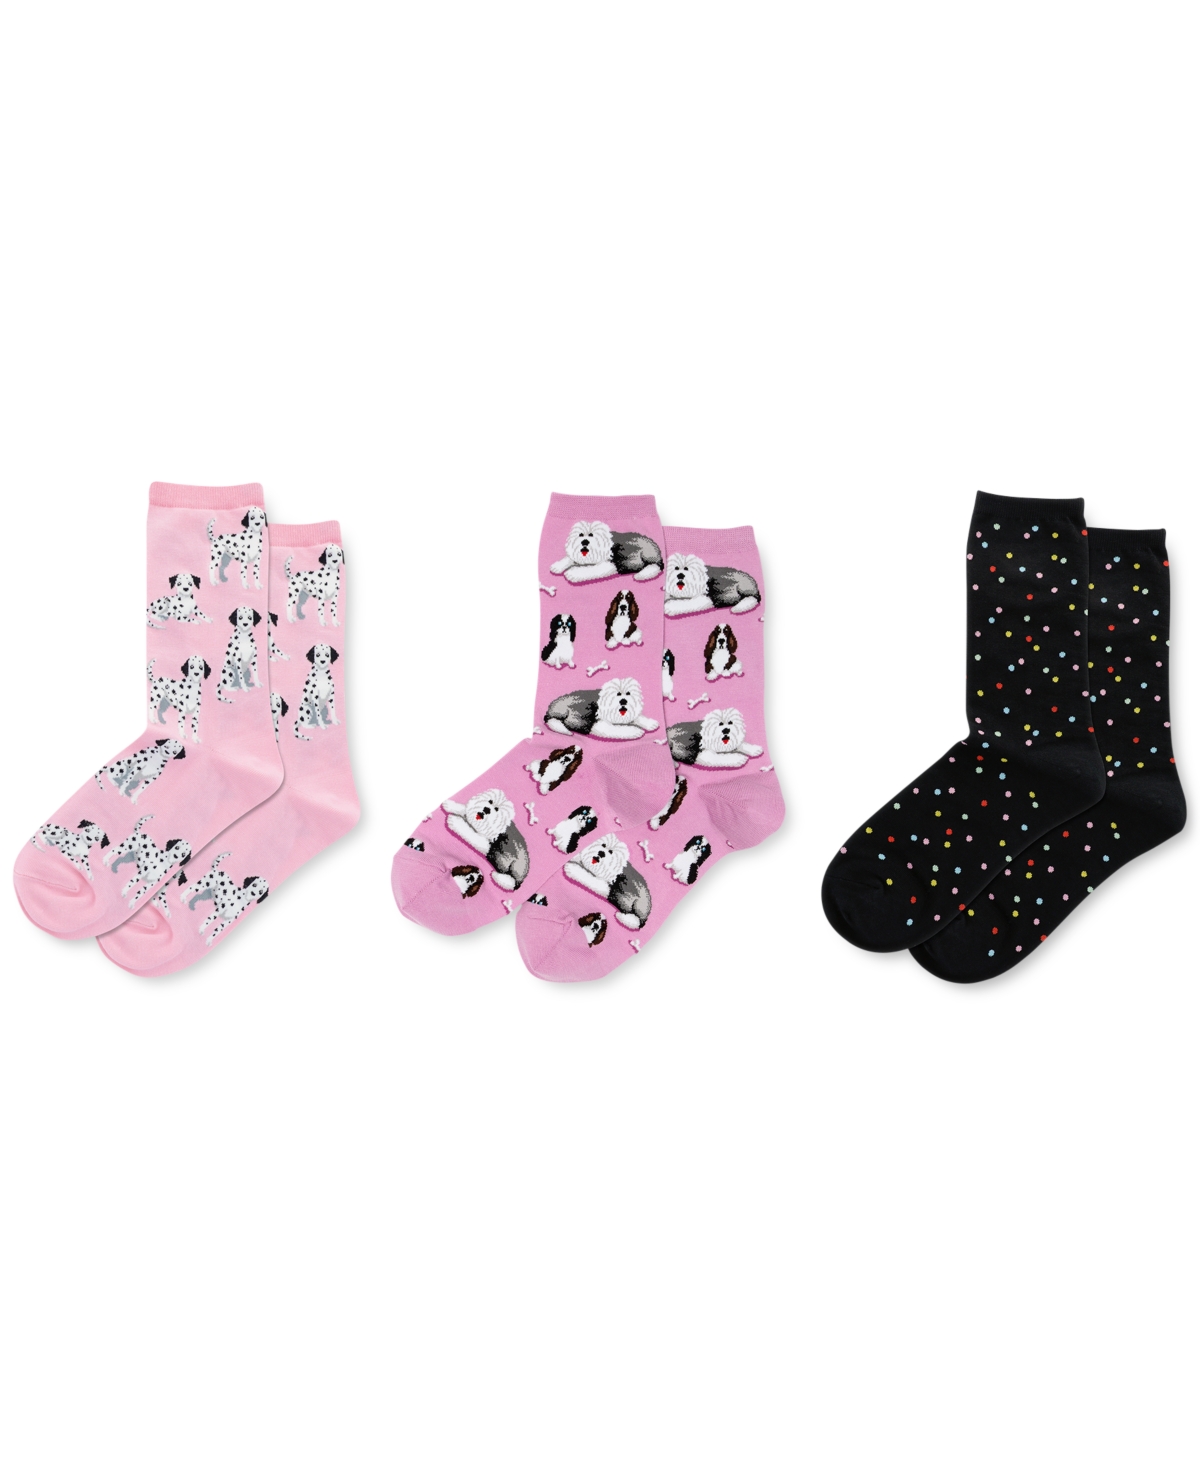 Hot Sox Women's 3-Pk. Assorted Socks